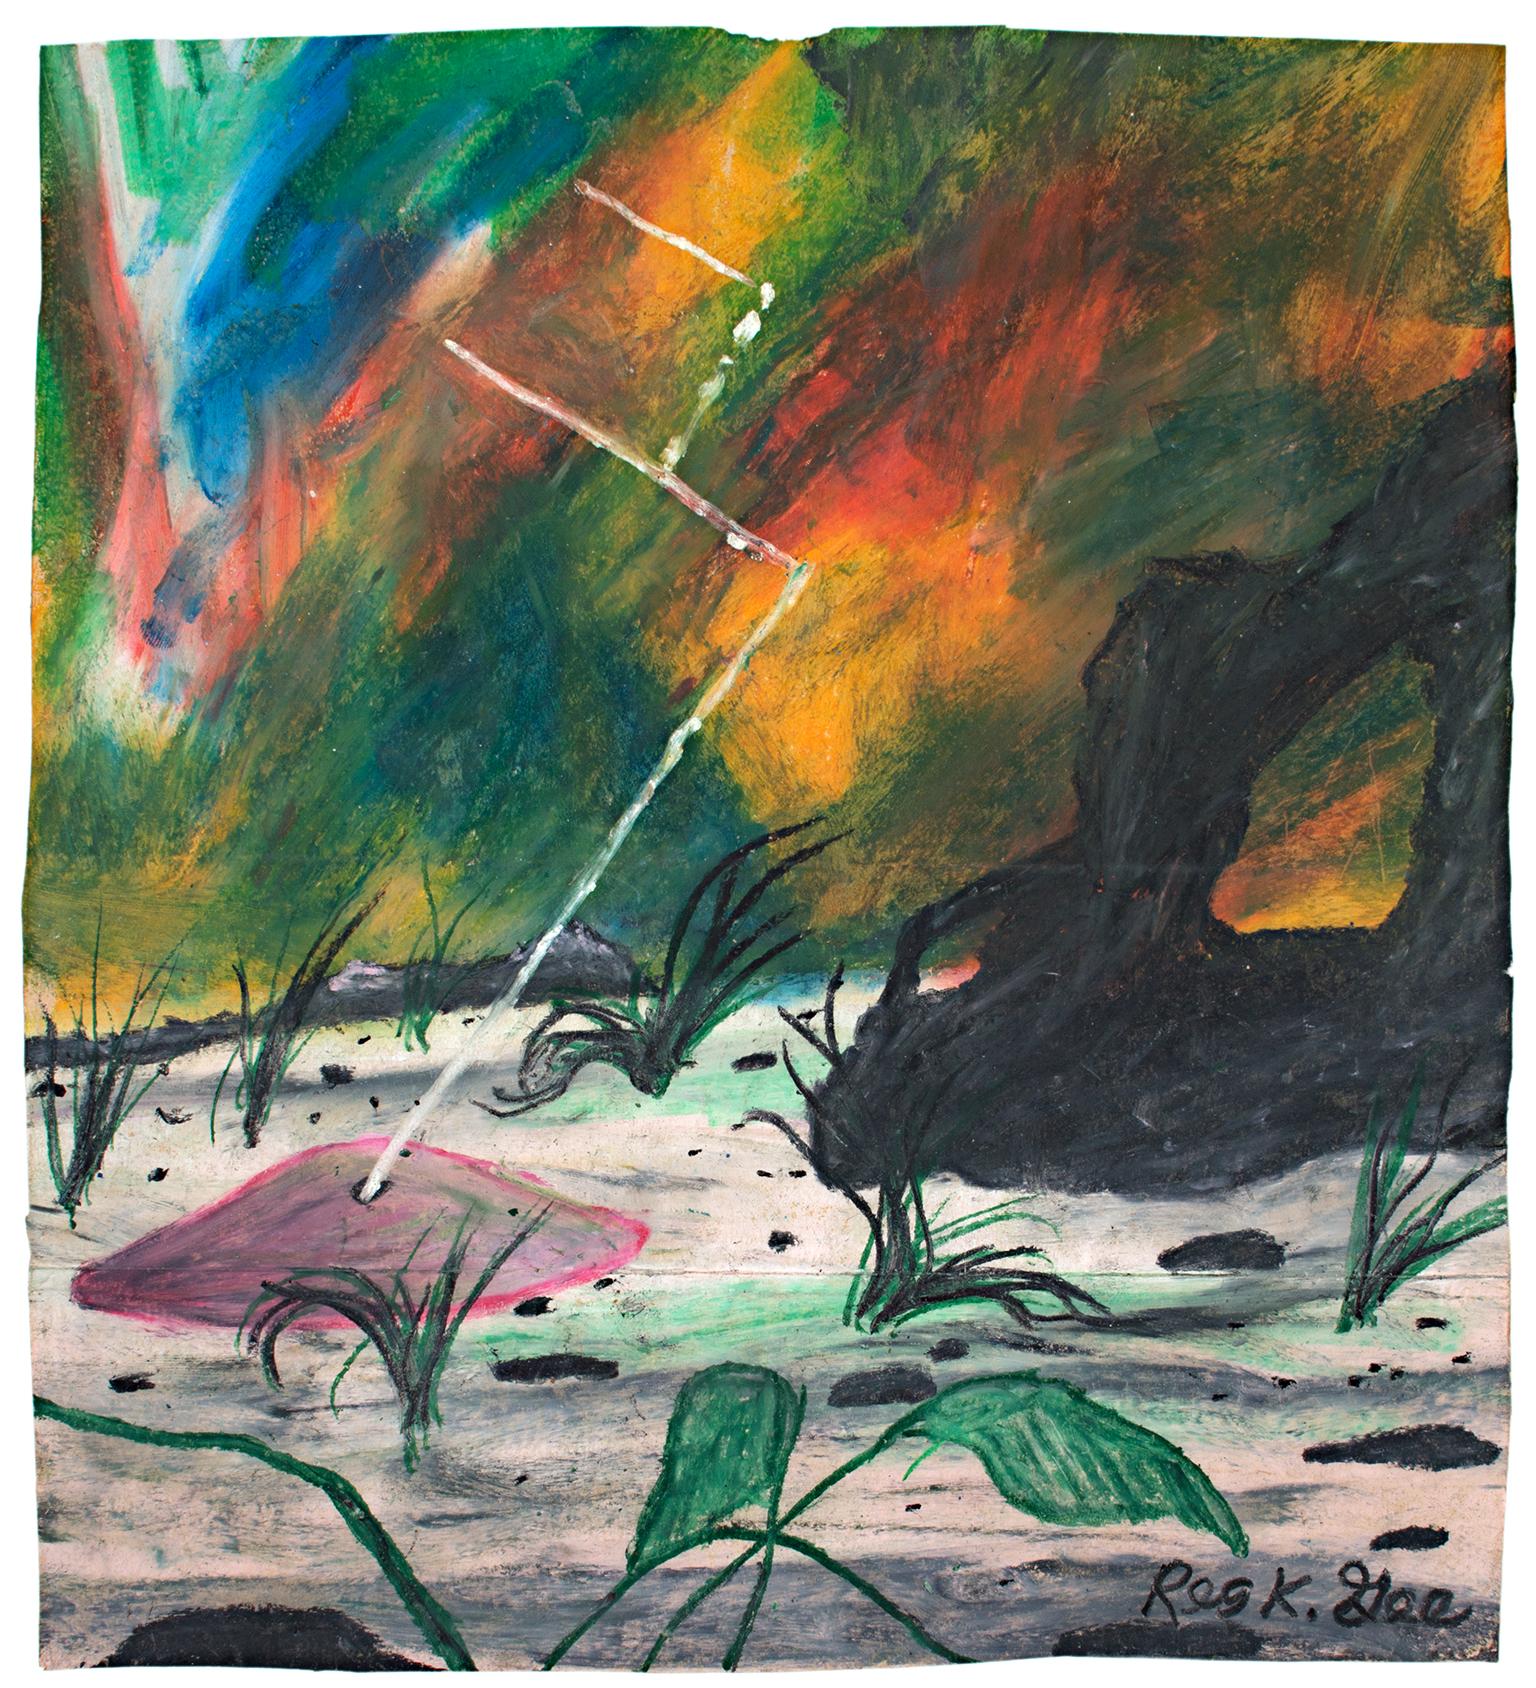 Reginald K. Gee Landscape Art - "Snapshot Taken of Saucer Touchdown" Oil Pastel on Grocery Bag by Reginald K Gee